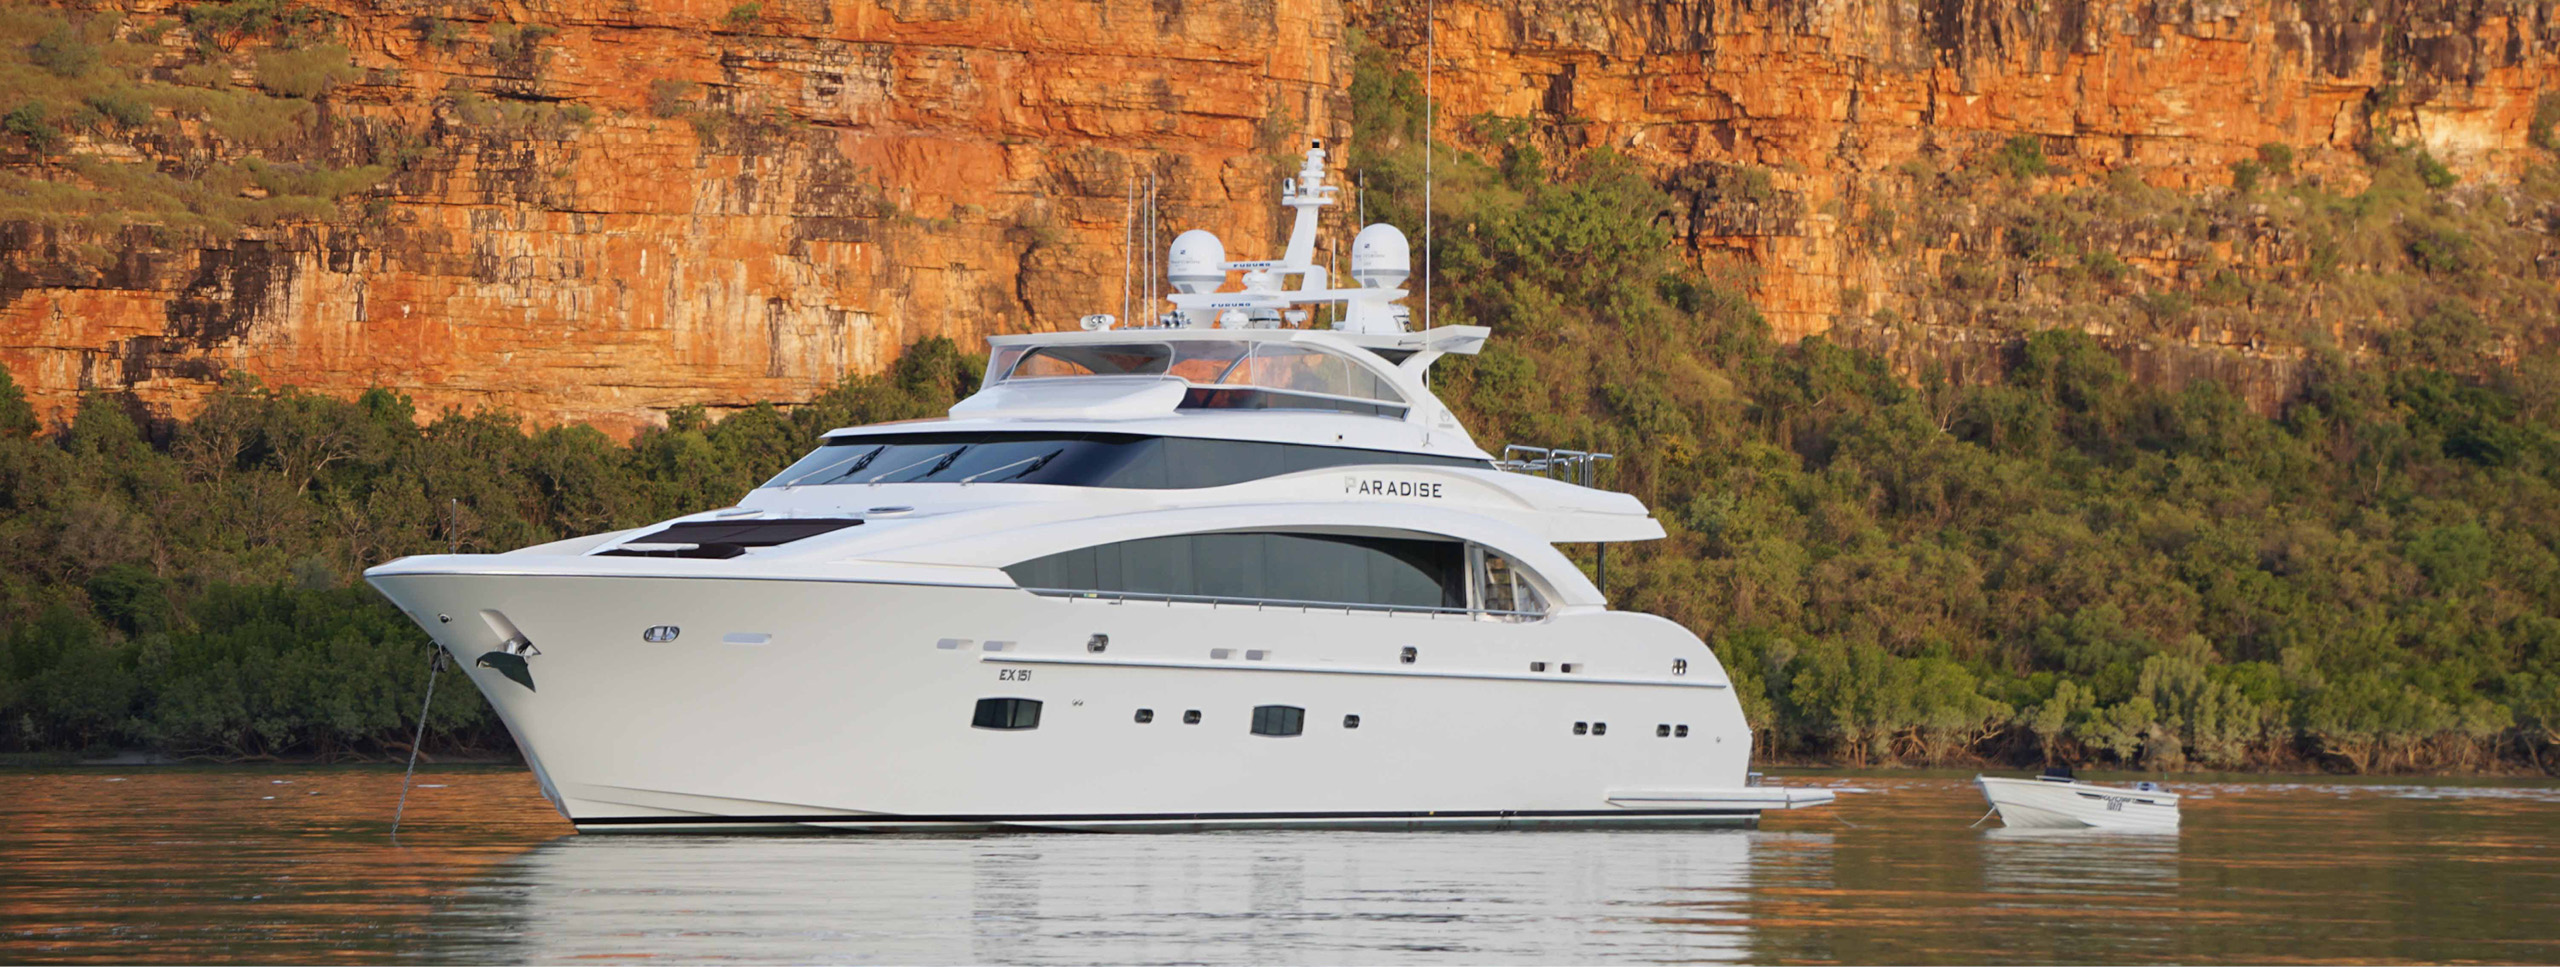 super yachts in australia